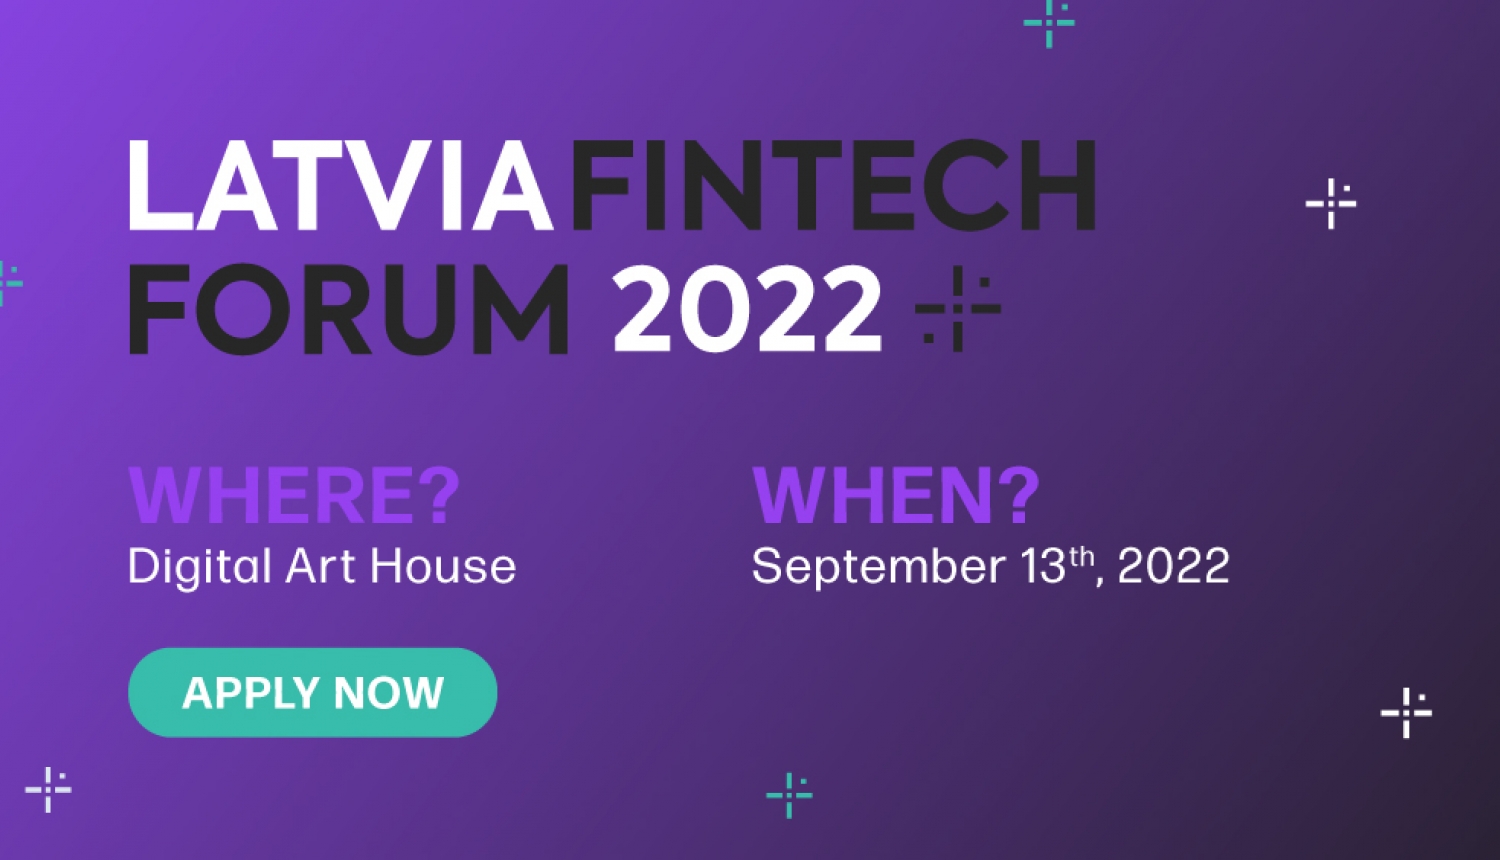 Latvia Fintech Forum 2022